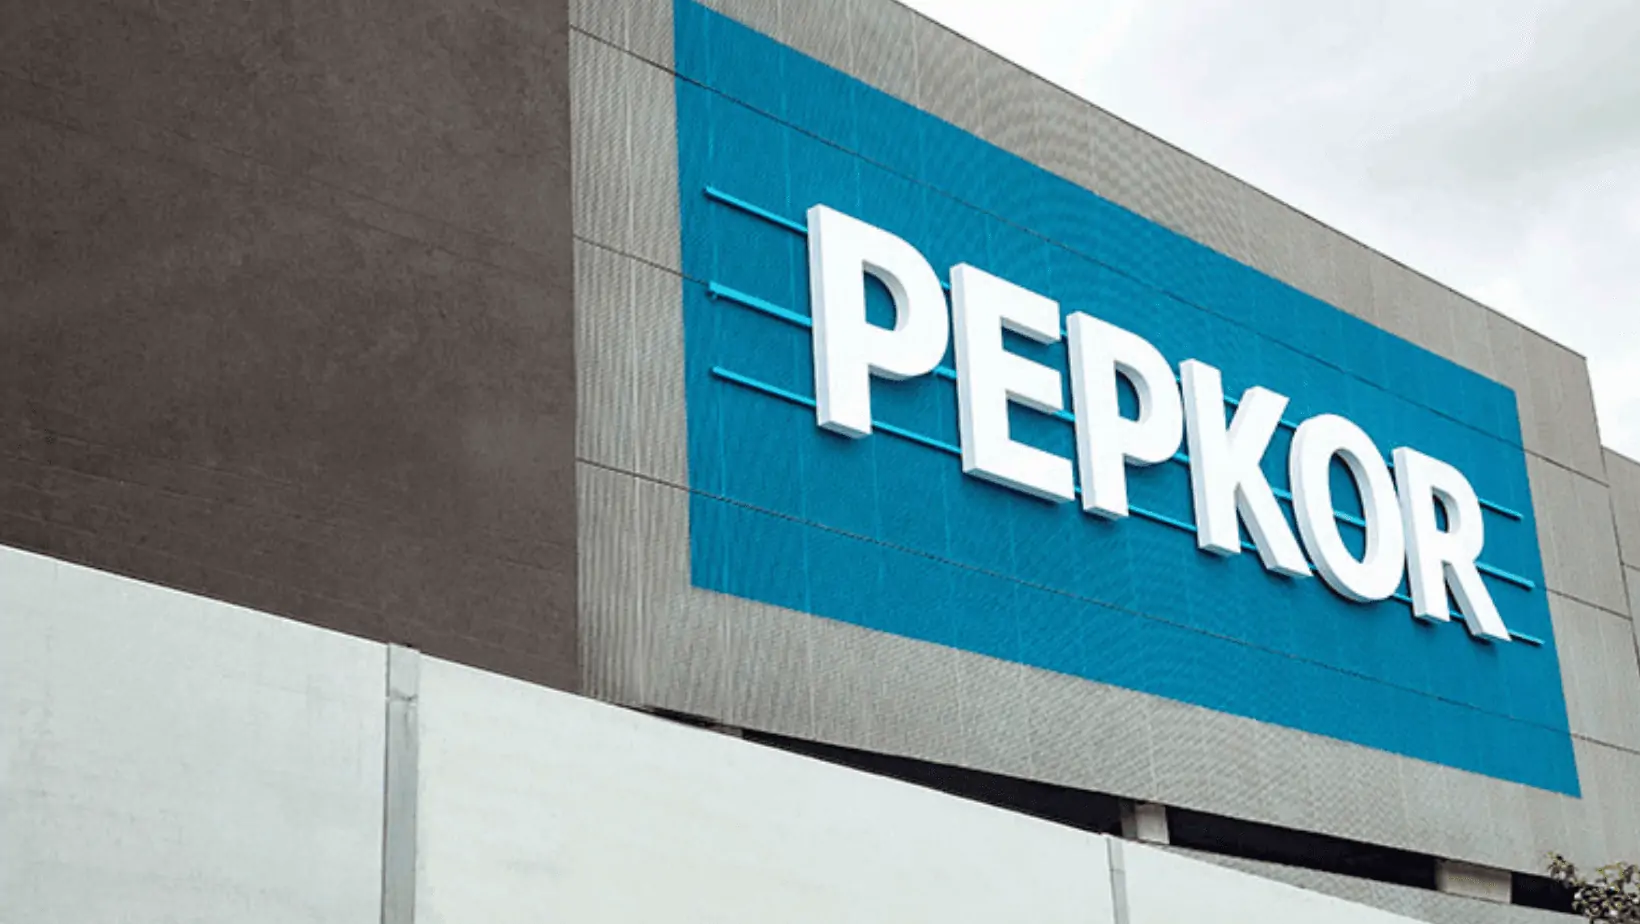 Pepkor Holdings Announces Disposal of TBCo for R1.2 Billion